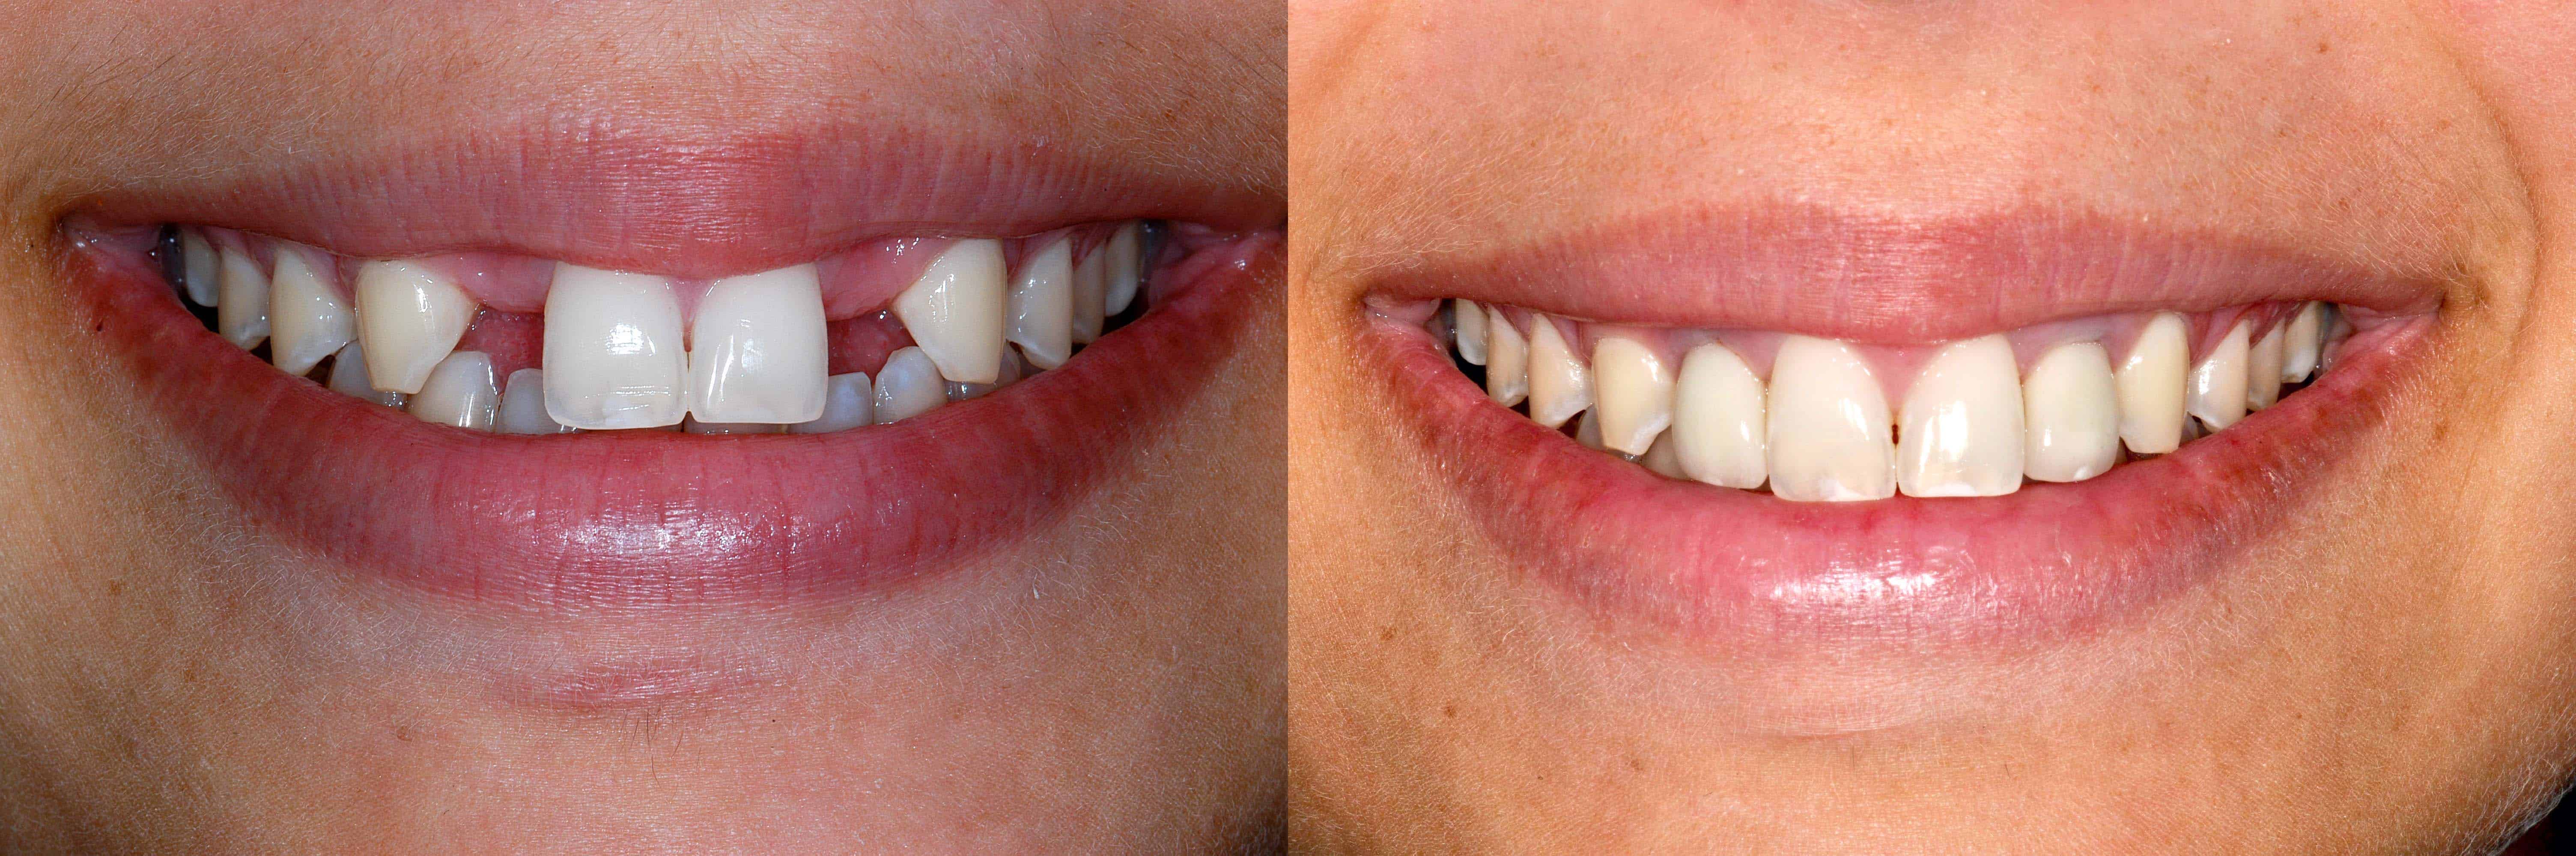 dental implants by forestbrook dental